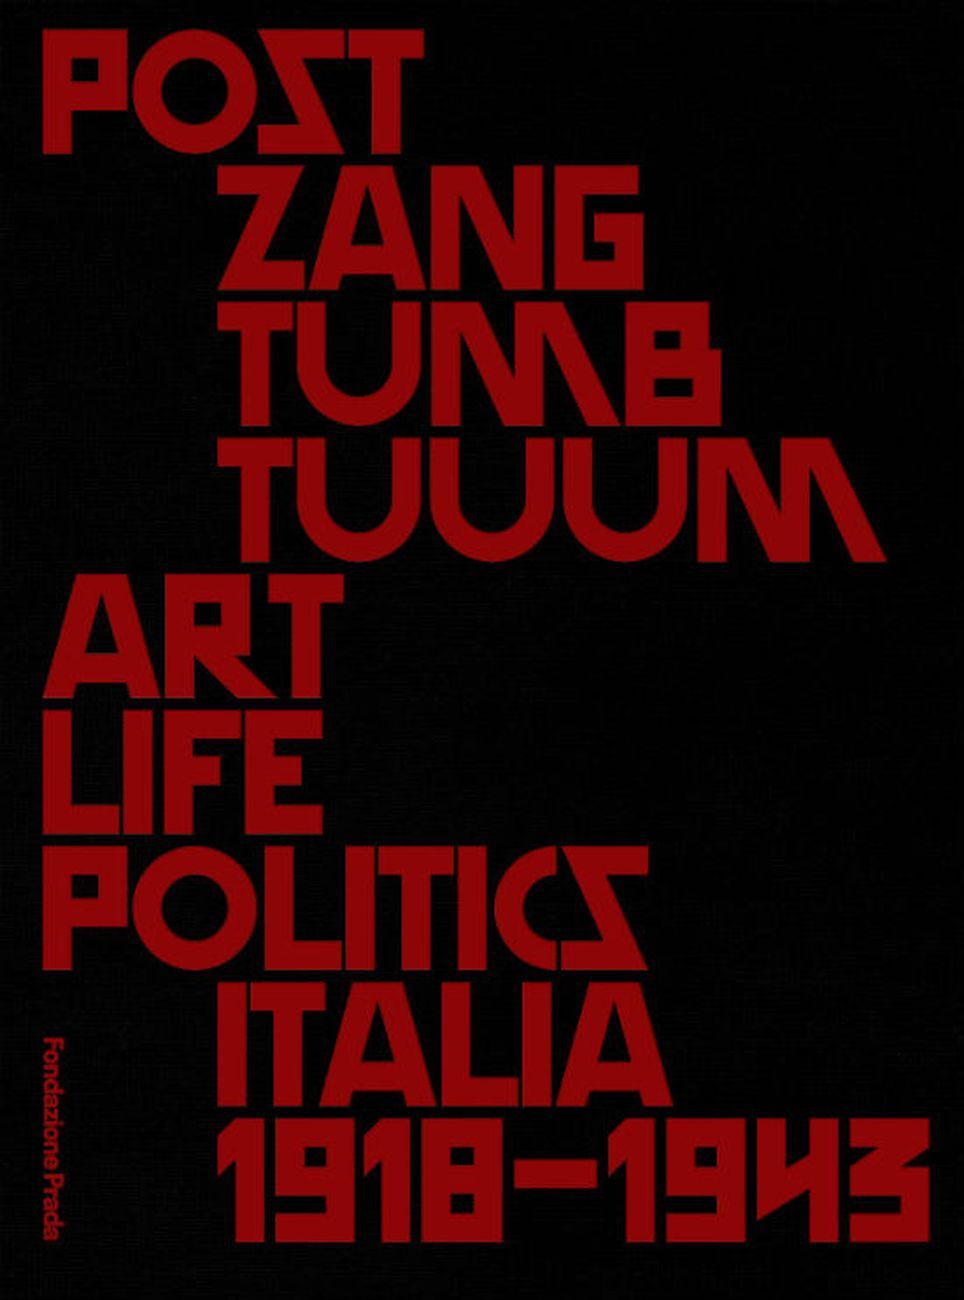 Post Zang Tumb Tuuum. Art Life Politics. Italia 1918-1943 (Fondazione Prada, Milano 2018)